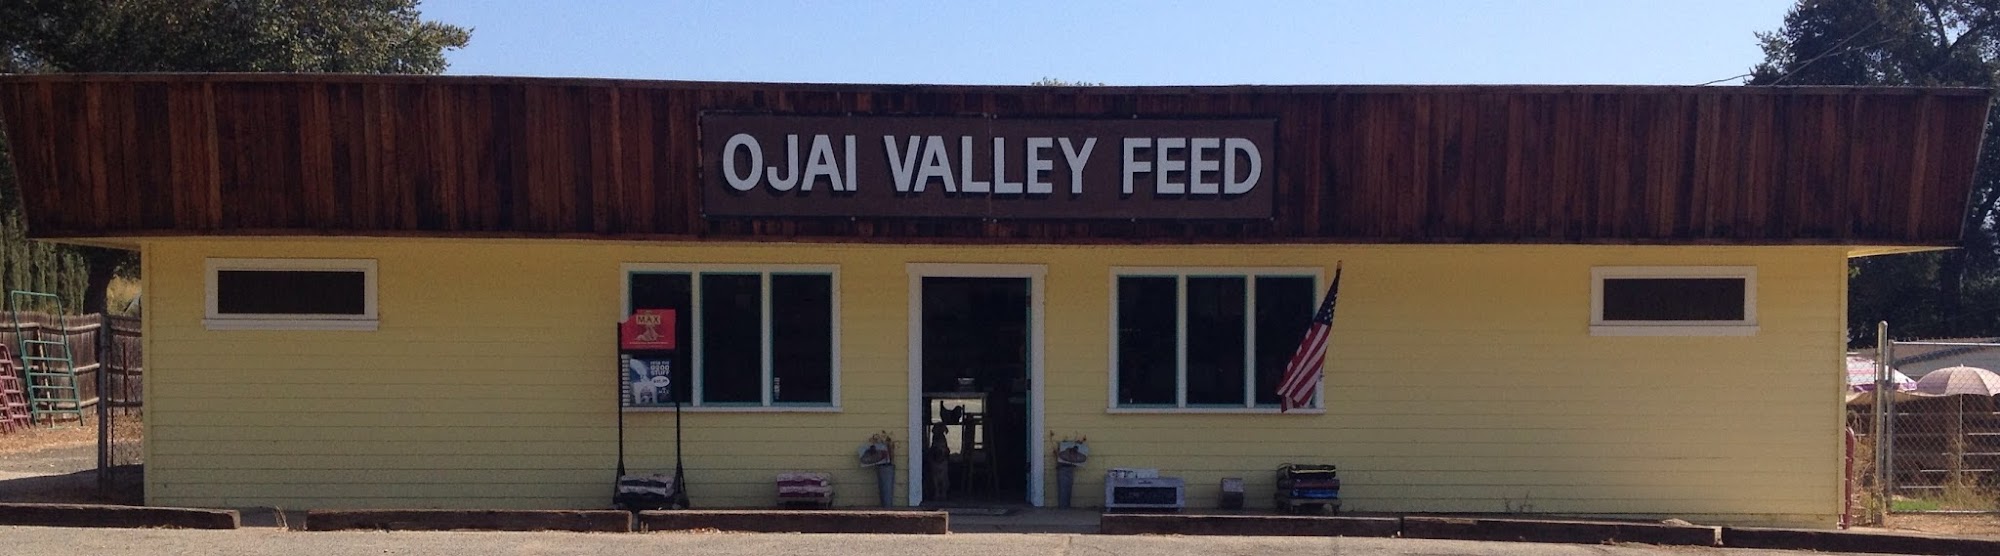 Ojai Valley Feed